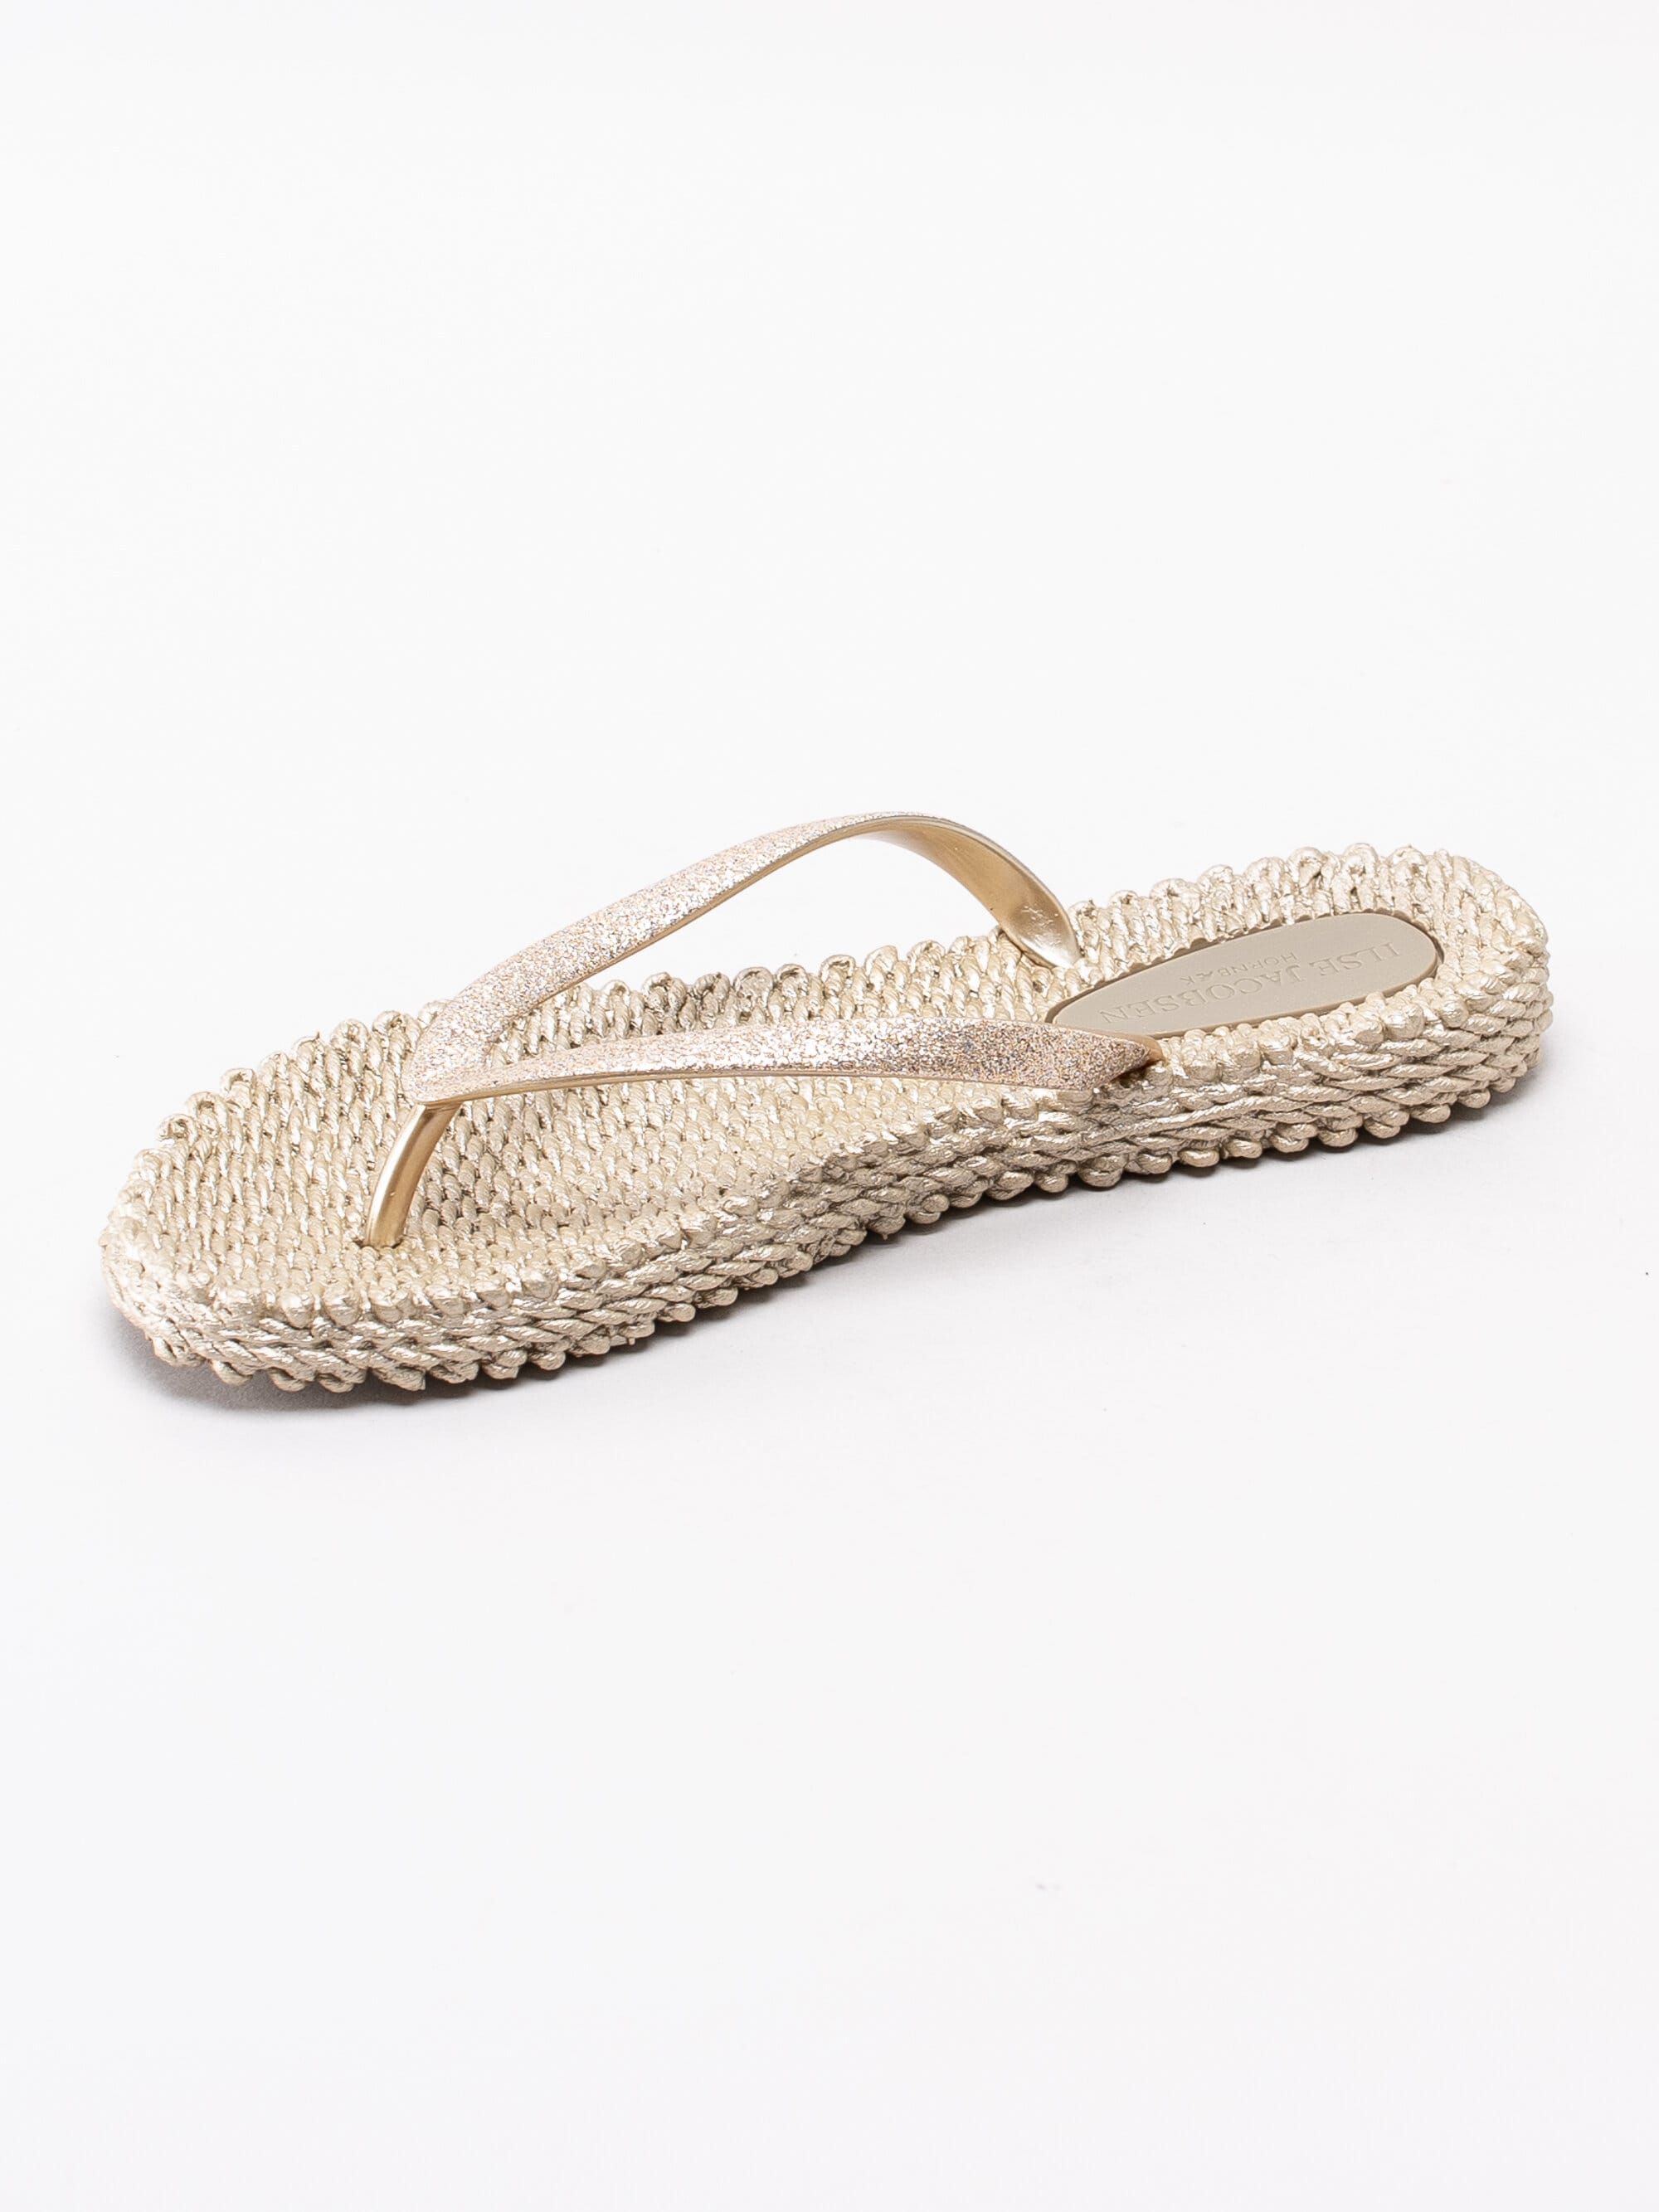 Ilse Jacobsen - Cheerful - Guld glittriga flip flops sandaler